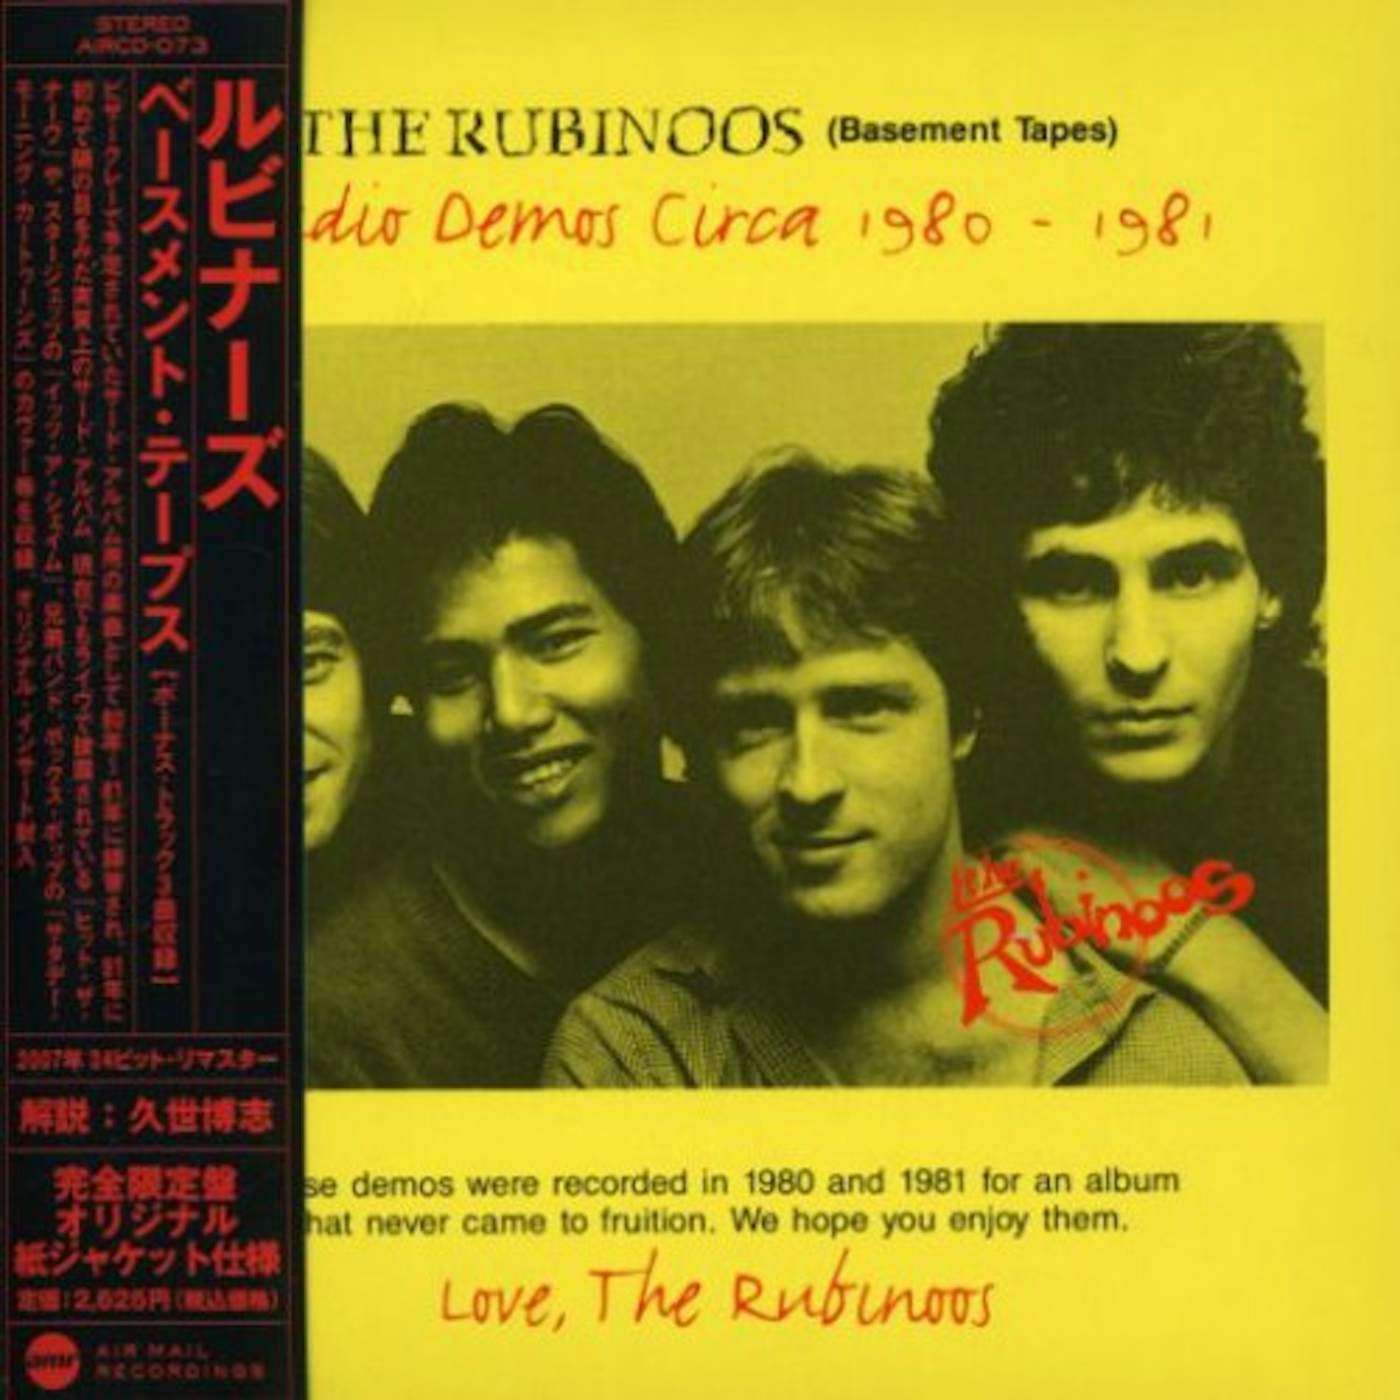 The Rubinoos BASEMENT TAPES CD